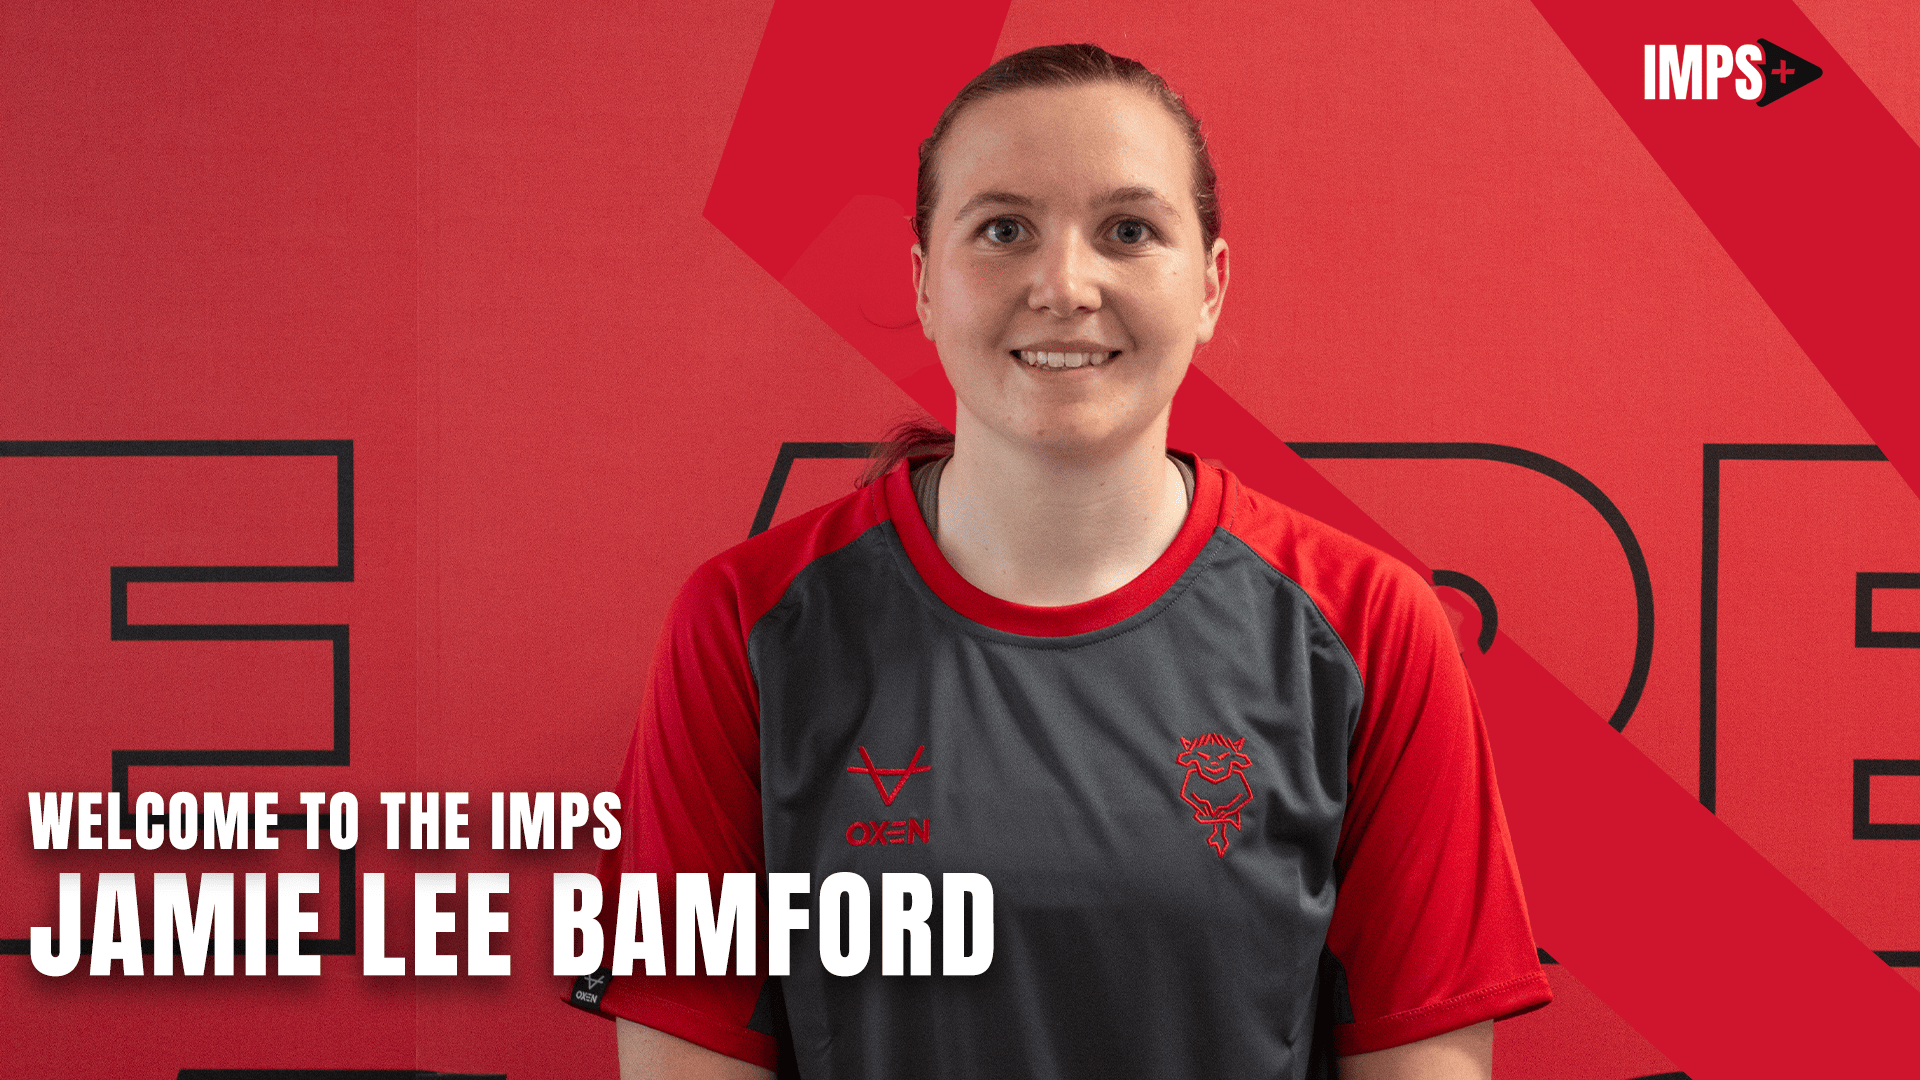 Jamie Lee Bamford joins the Imps.